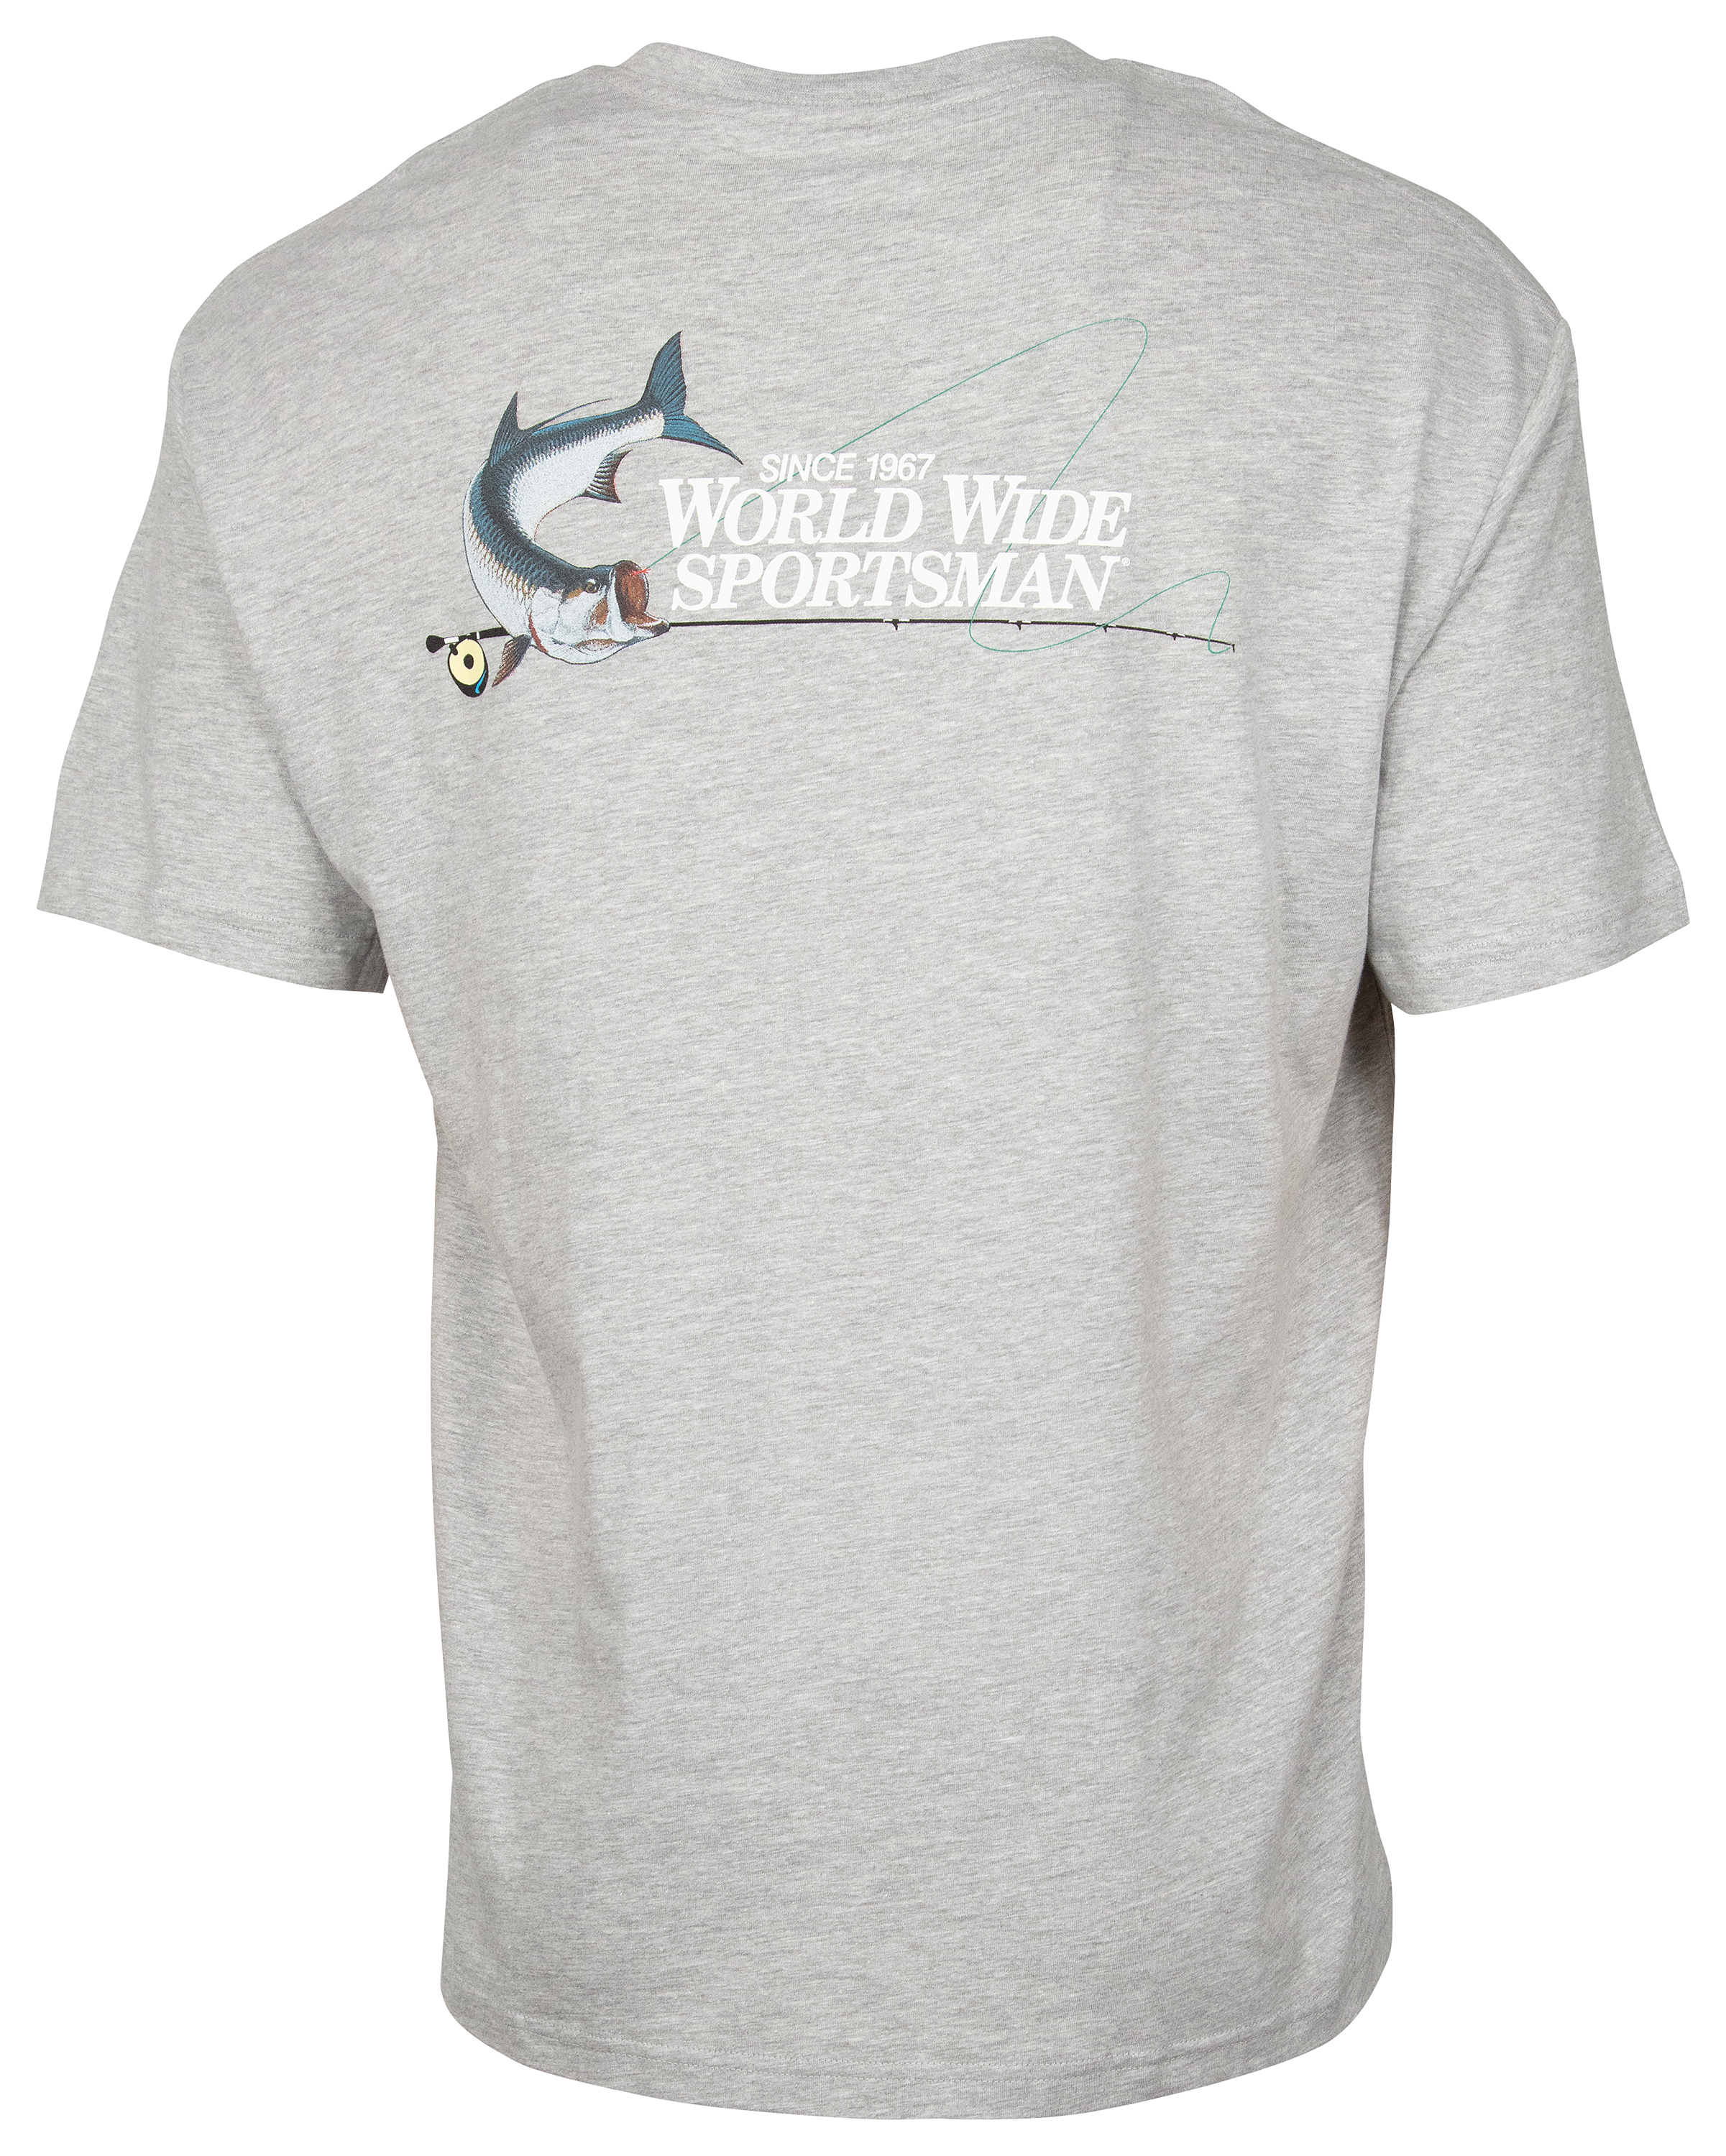 World Wide Sportsman Logo Graphic Short-Sleeve T-Shirt for Men - Heather Gray - XL